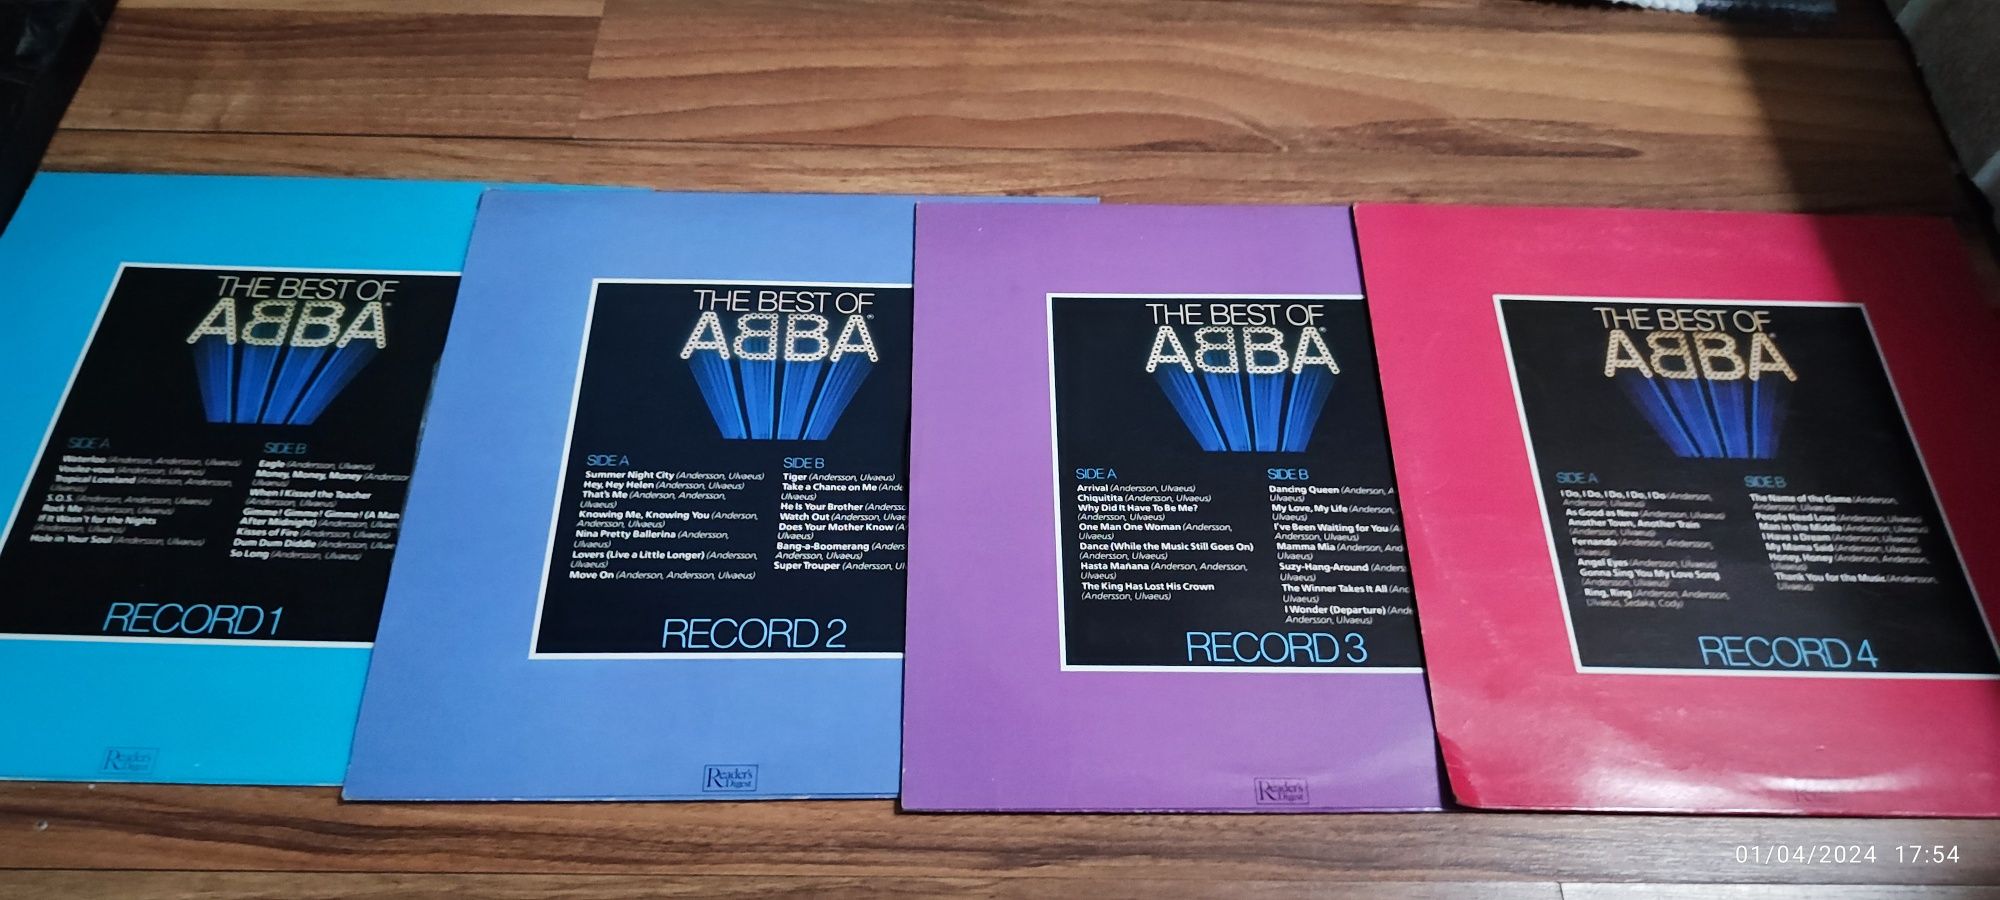 Coletânea The Best of Abba 4 vinis